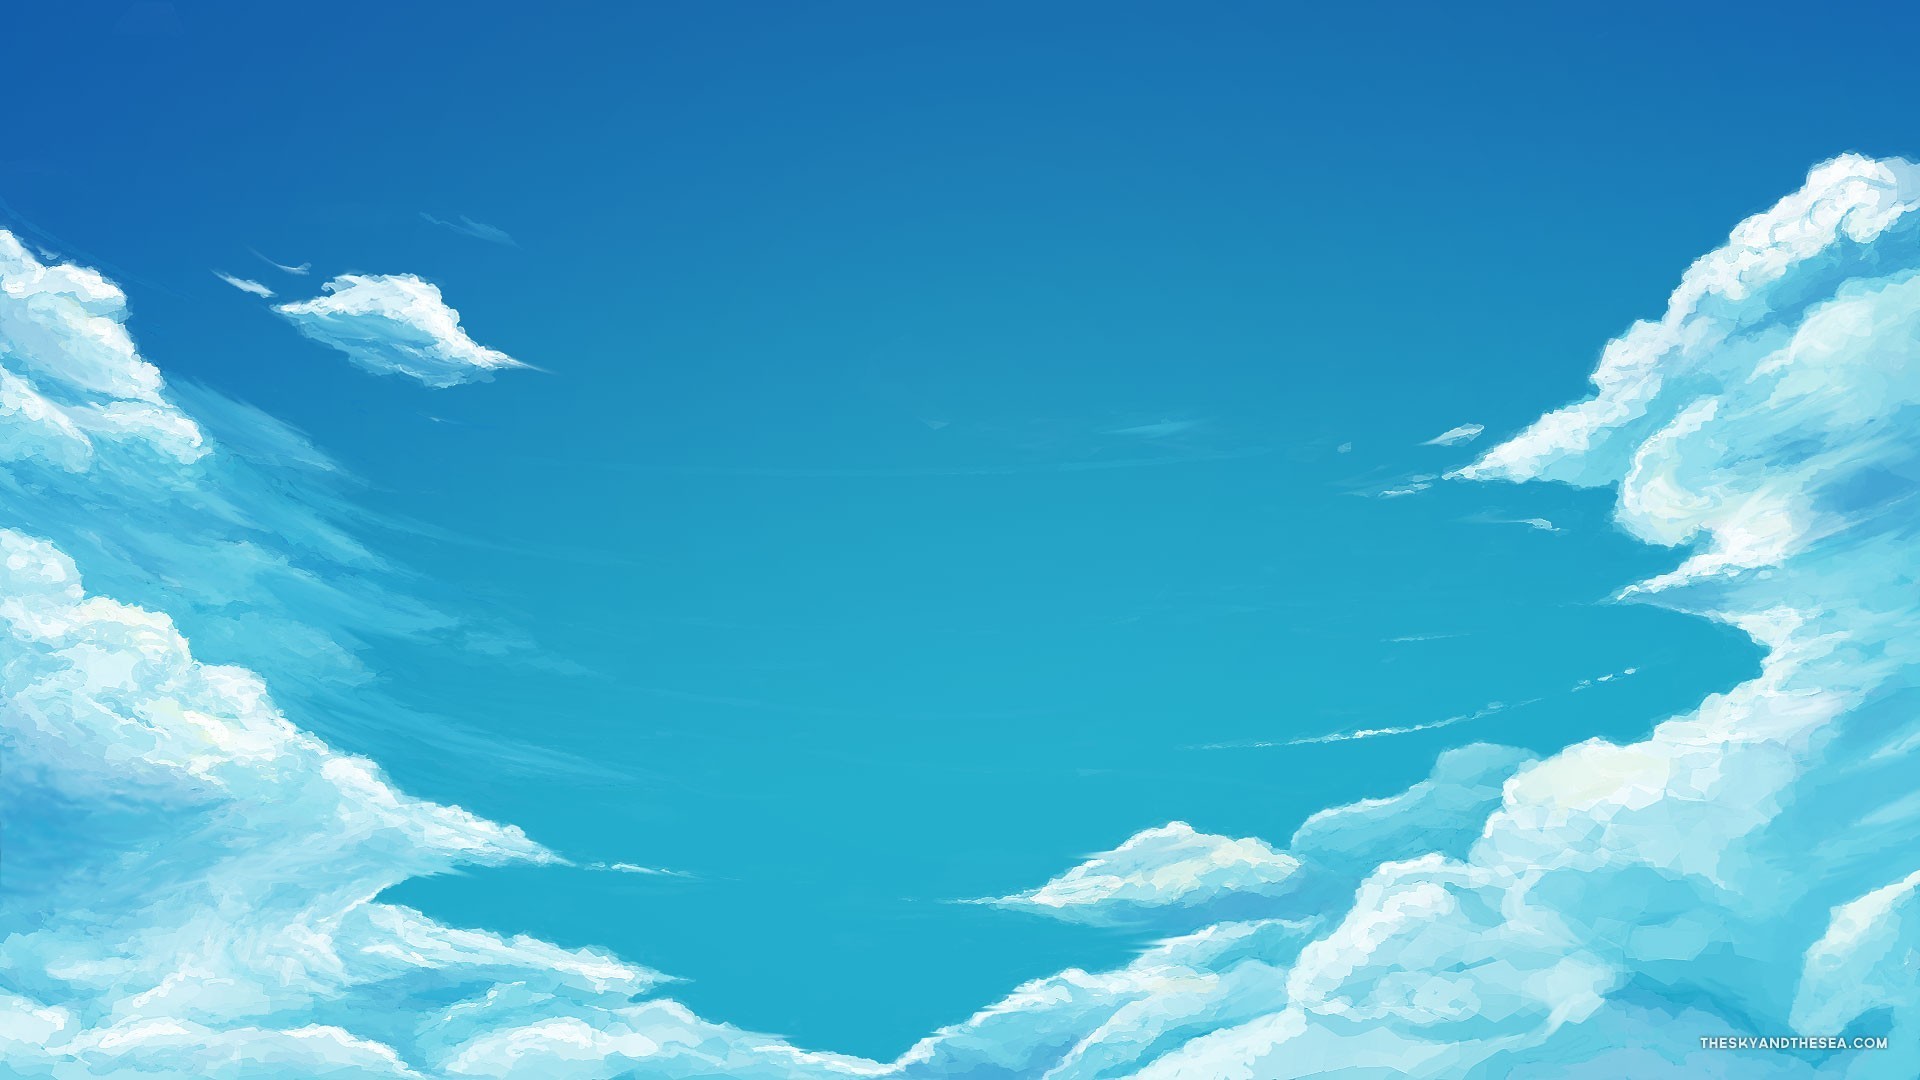 1920x1080 Very cool blue sky wallpaper